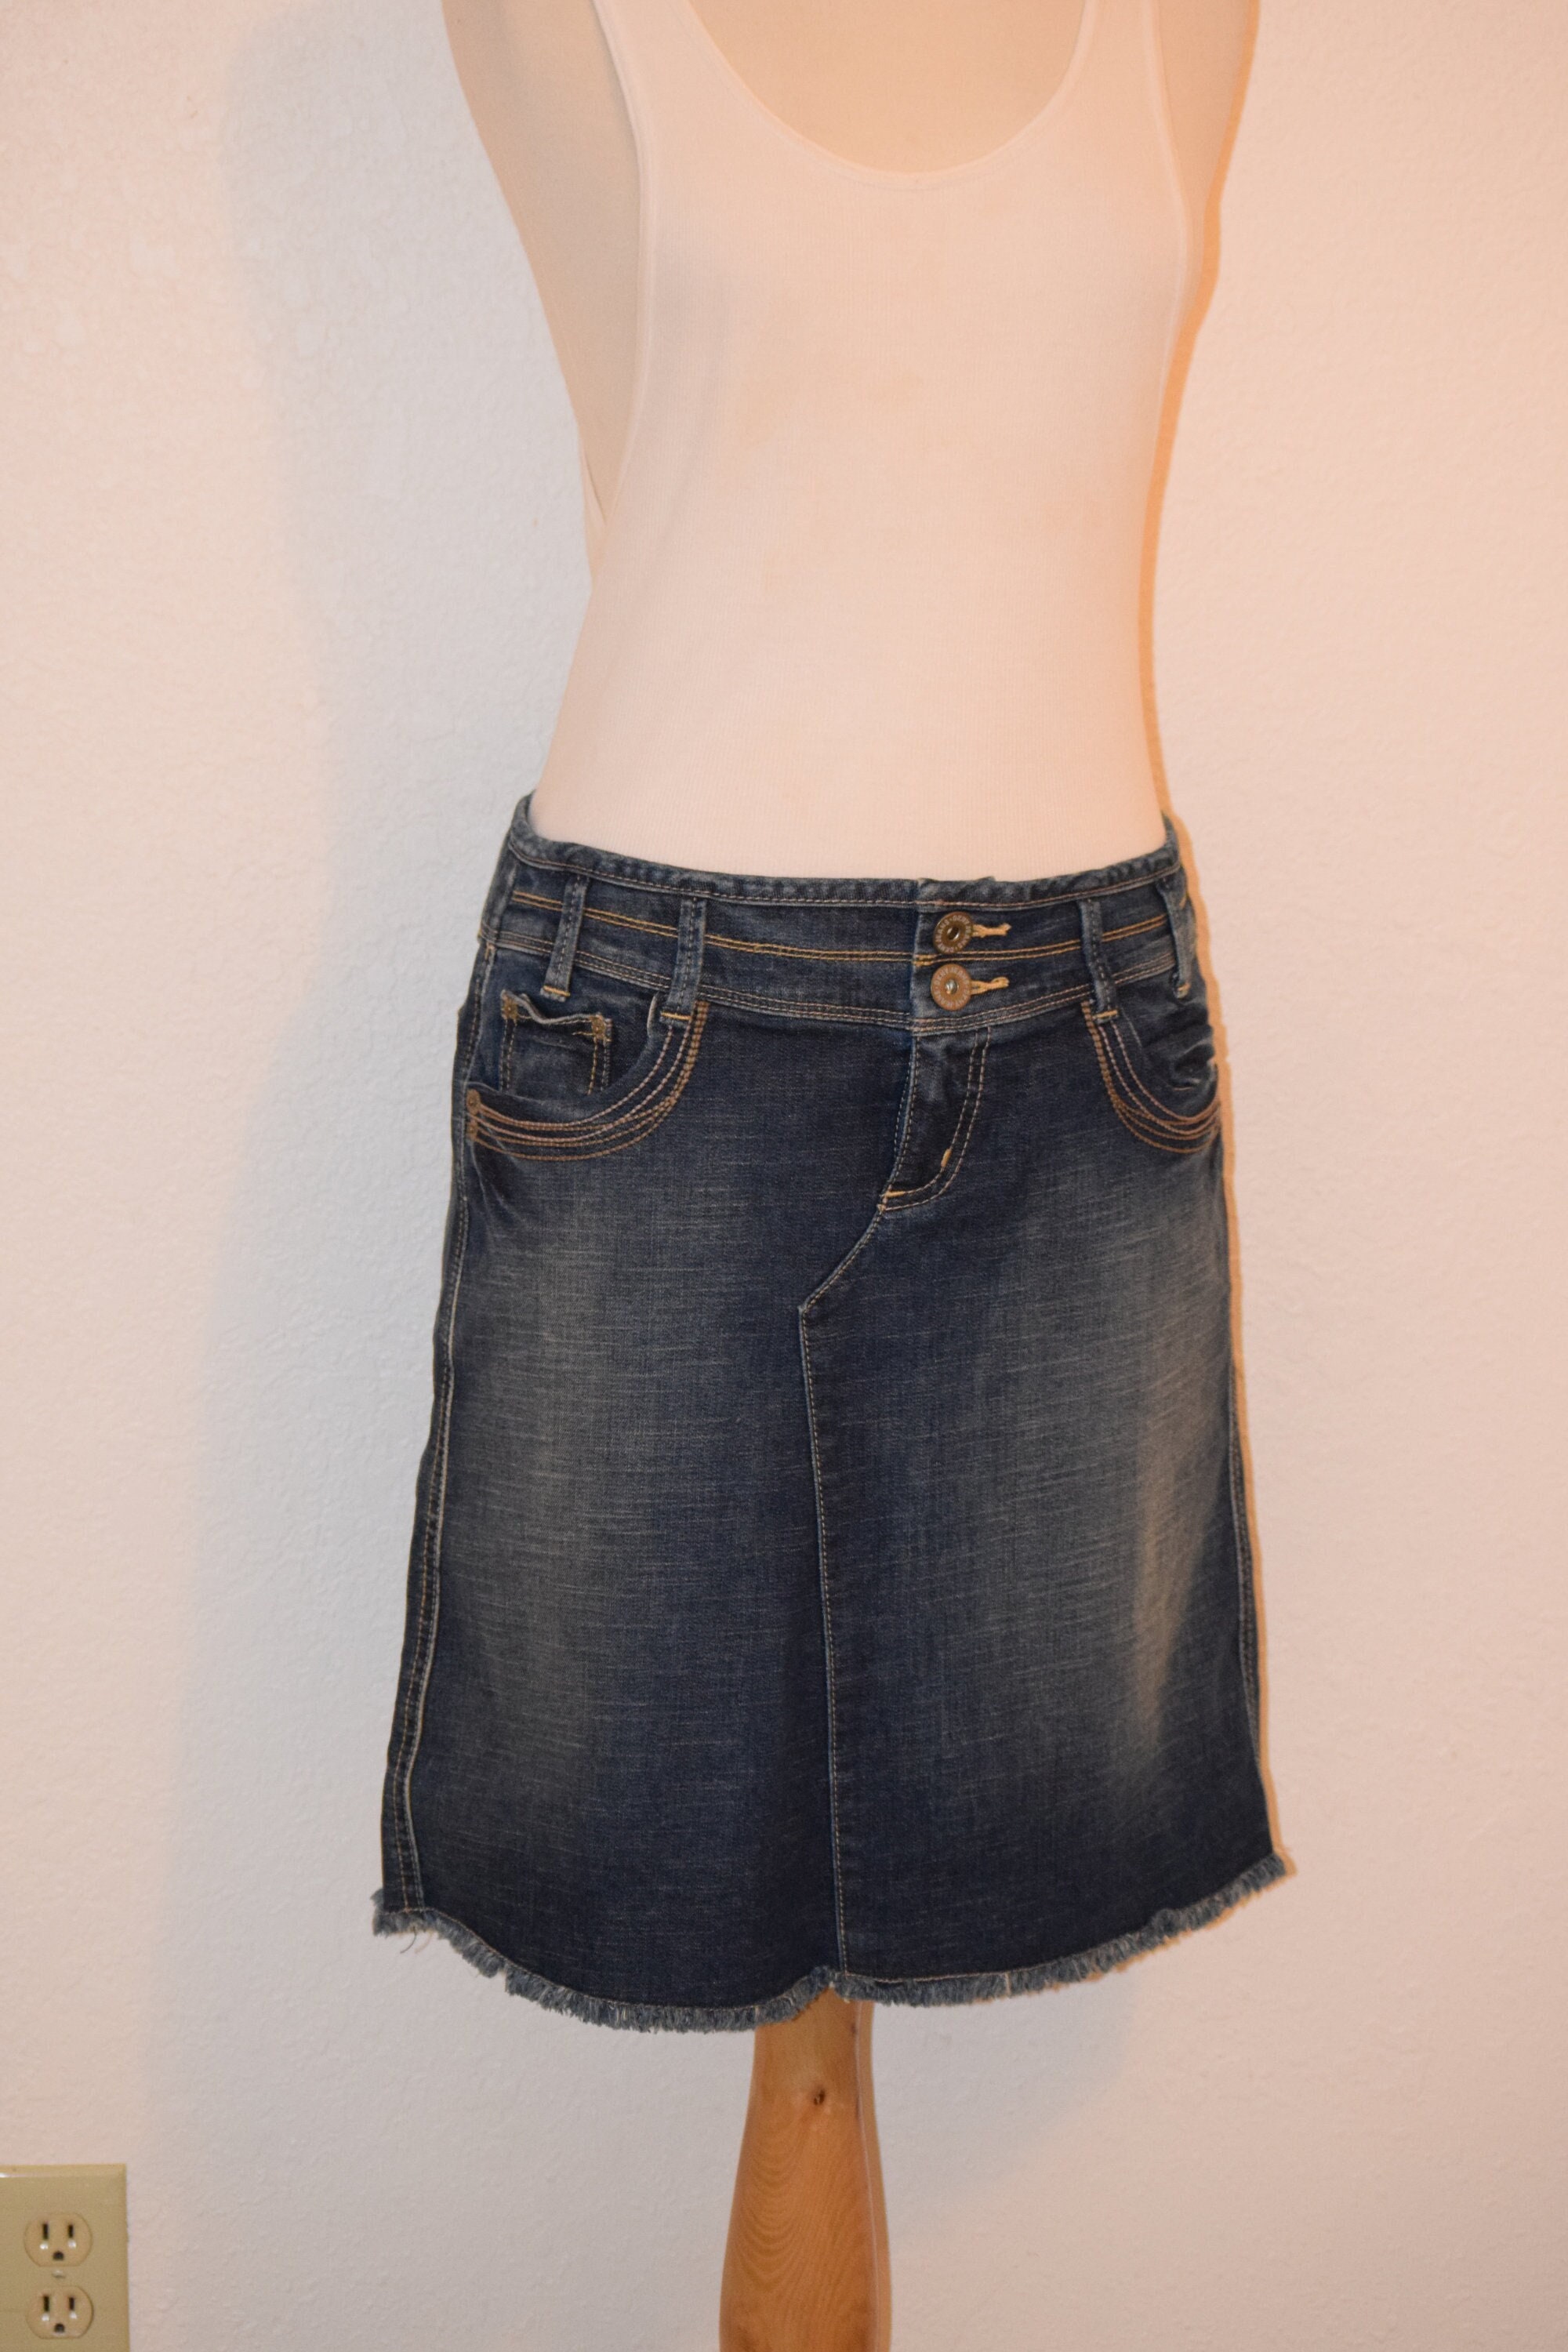 Throw Back \'DKNY Jeans\' Medium Washed Denim Skirt With Frayed Hem / Western Denim  Skirt / Summer Festival Skirt Size 8 / Medium - Etsy